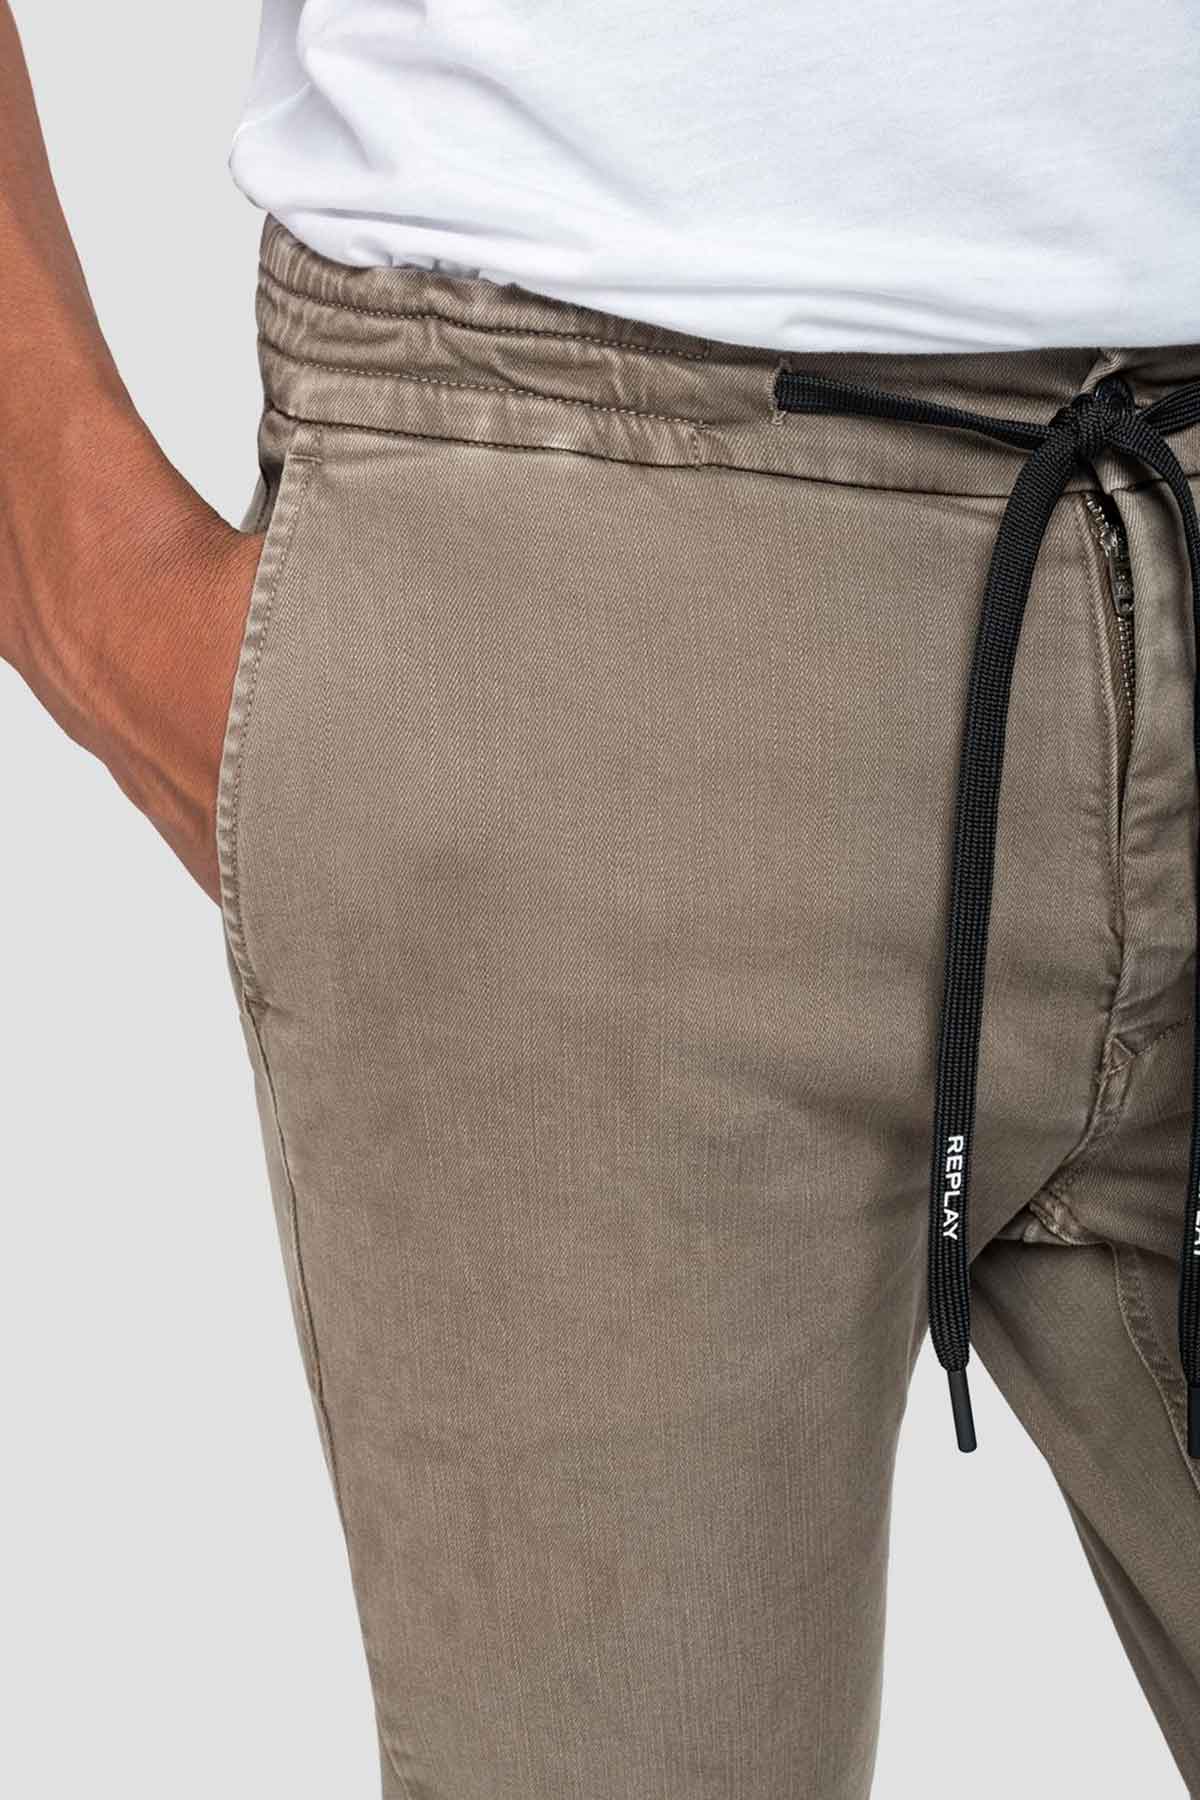 Replay Slim Fit Joseph Hyperflex Pantolon-Libas Trendy Fashion Store